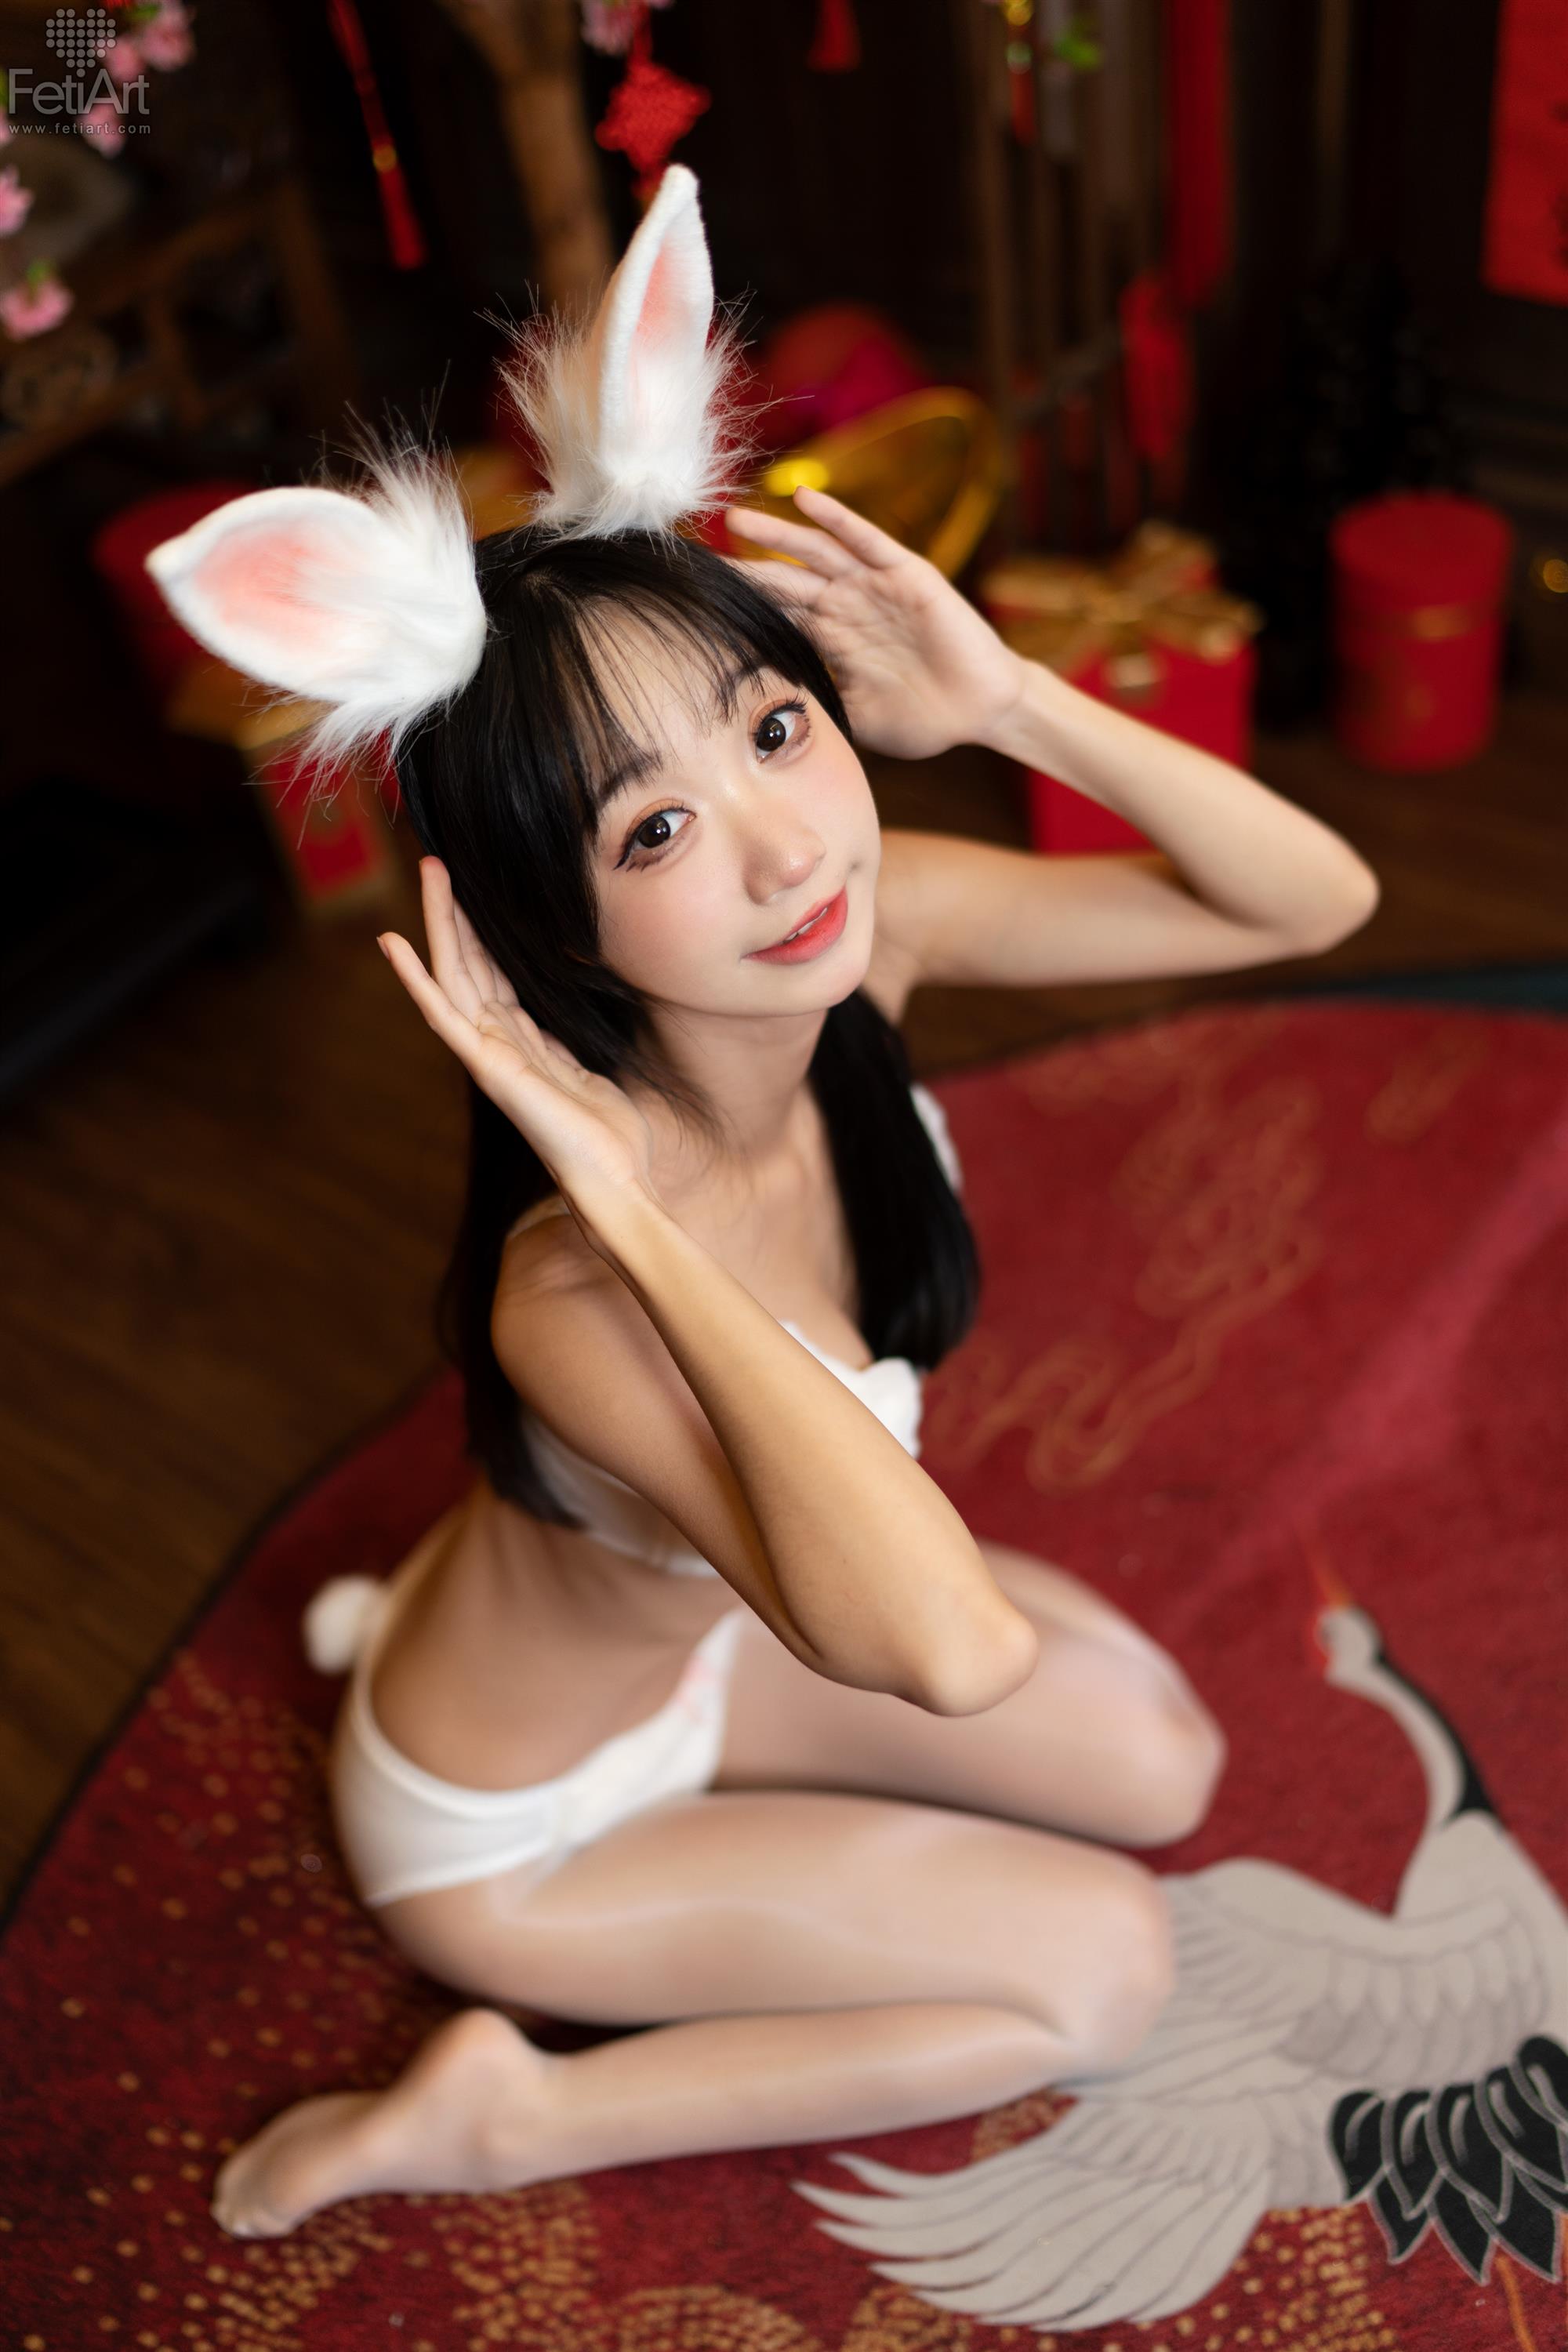 FetiArt 尚物集 No.056 Bunny Style MODEL Naoko - 10.jpg